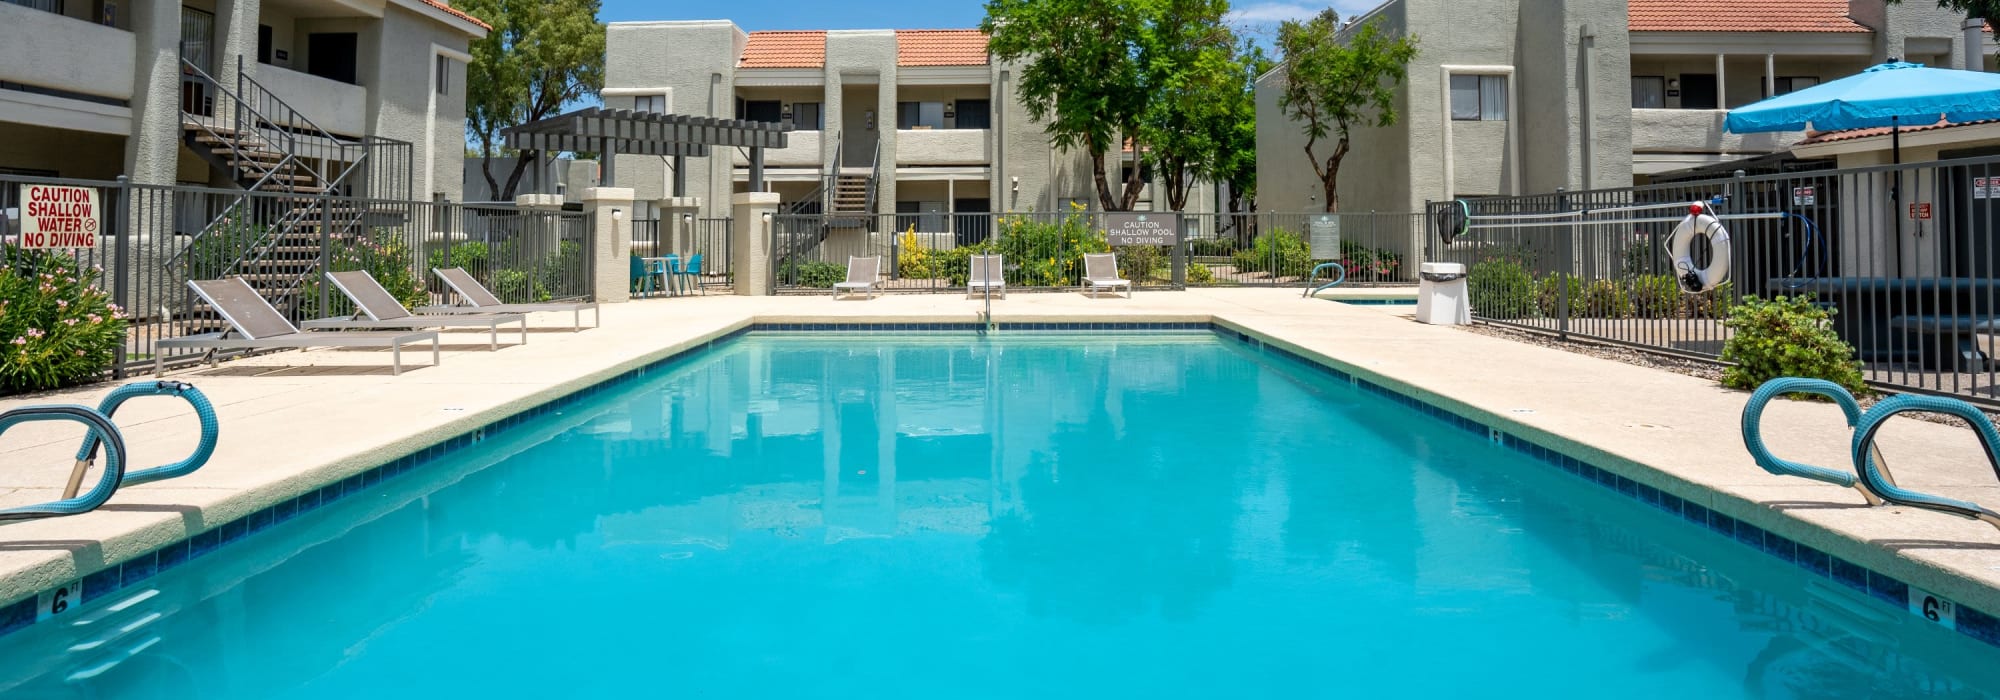 Resort-style swimming pool at Park at 33rd in Phoenix, Arizona